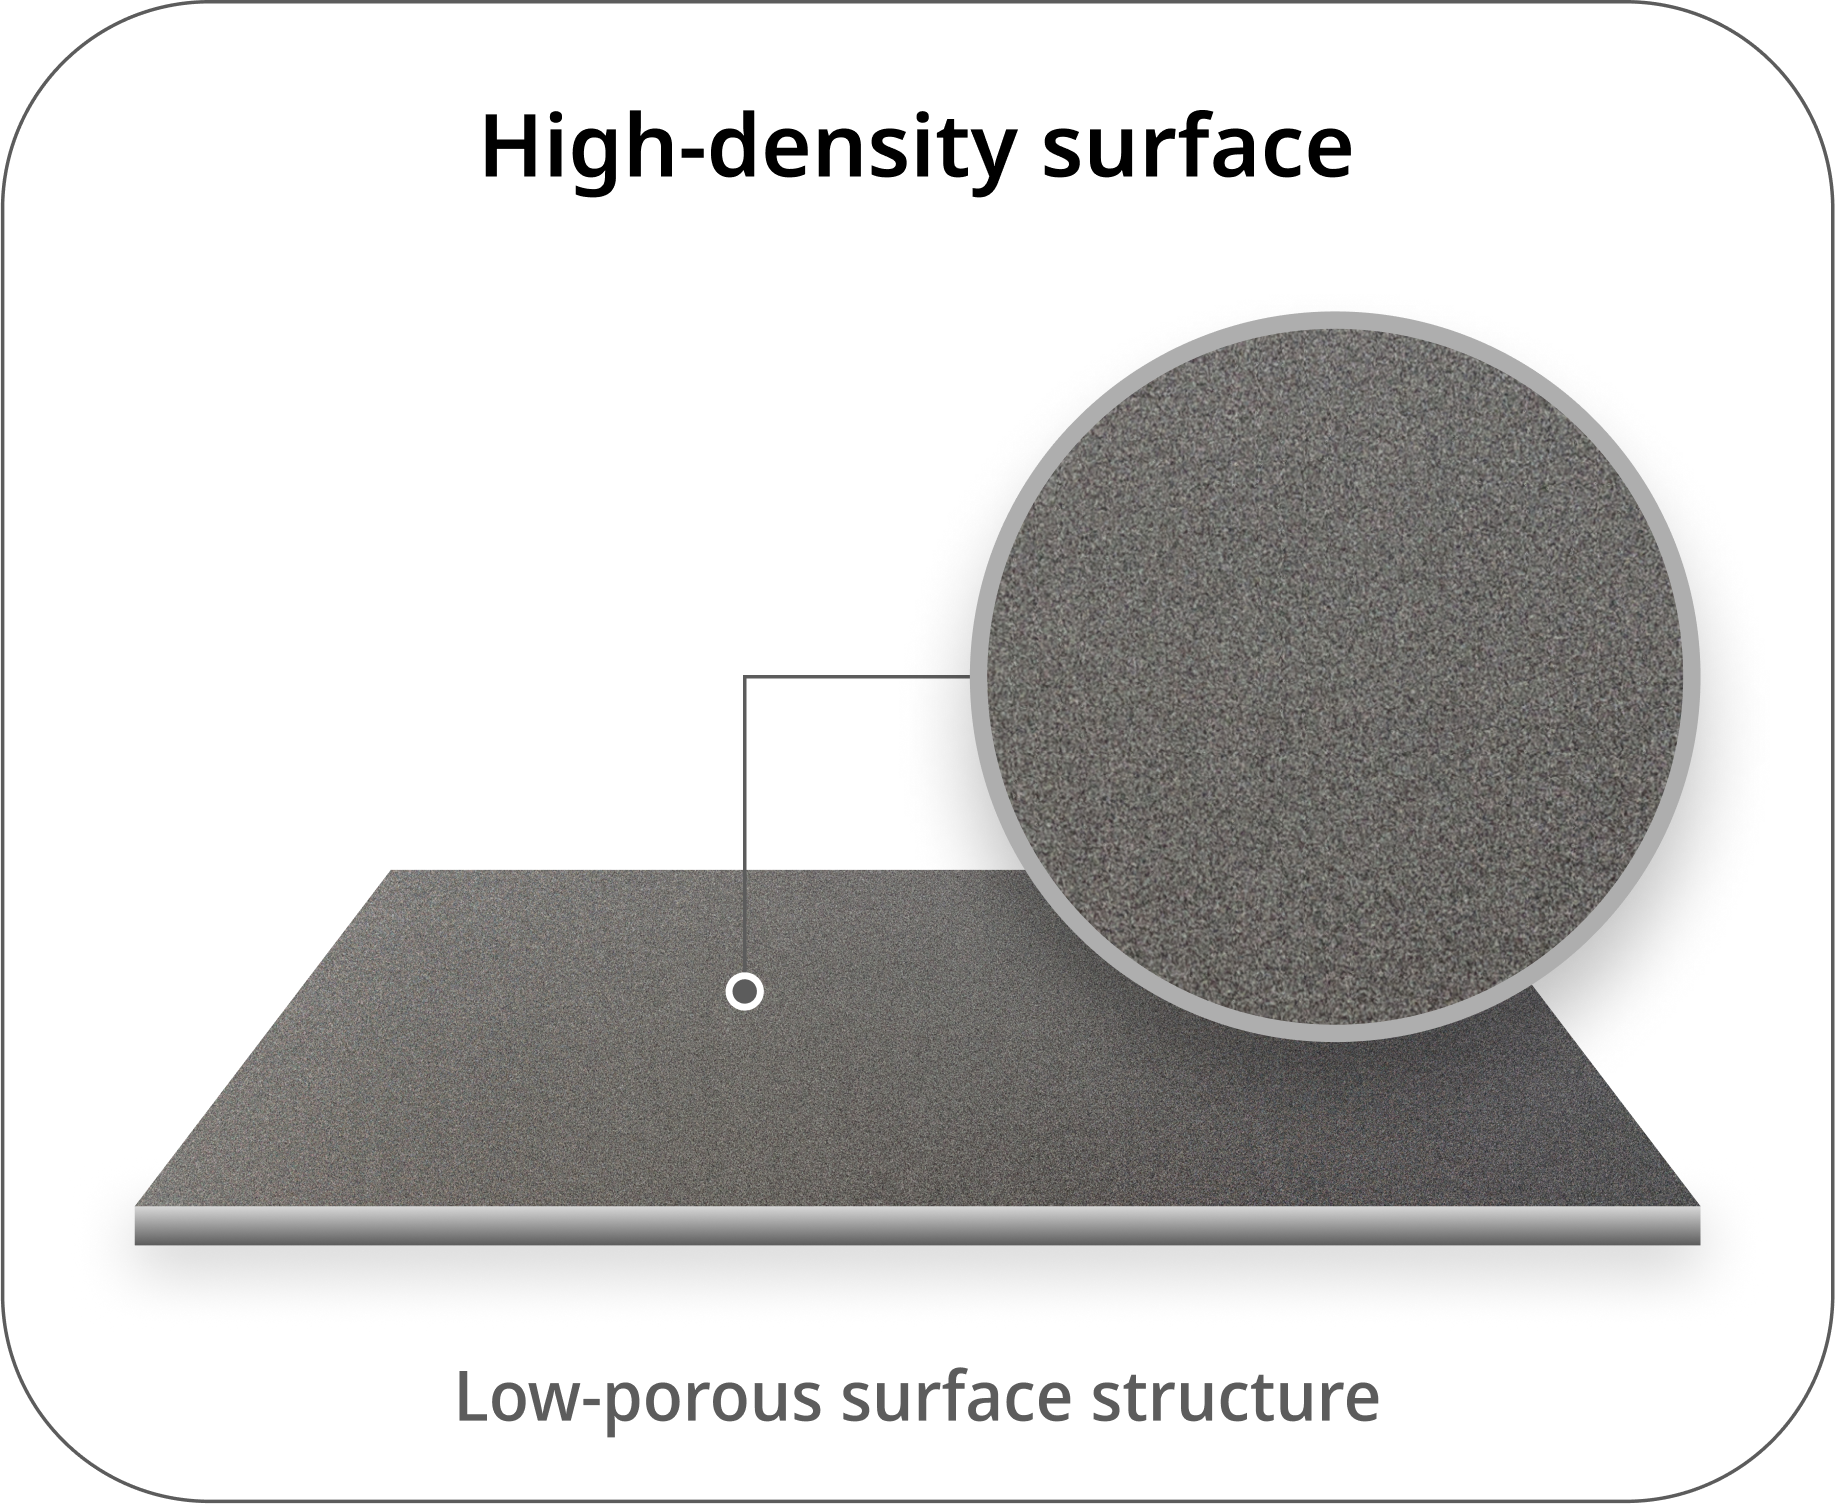 Low-porous surface structure